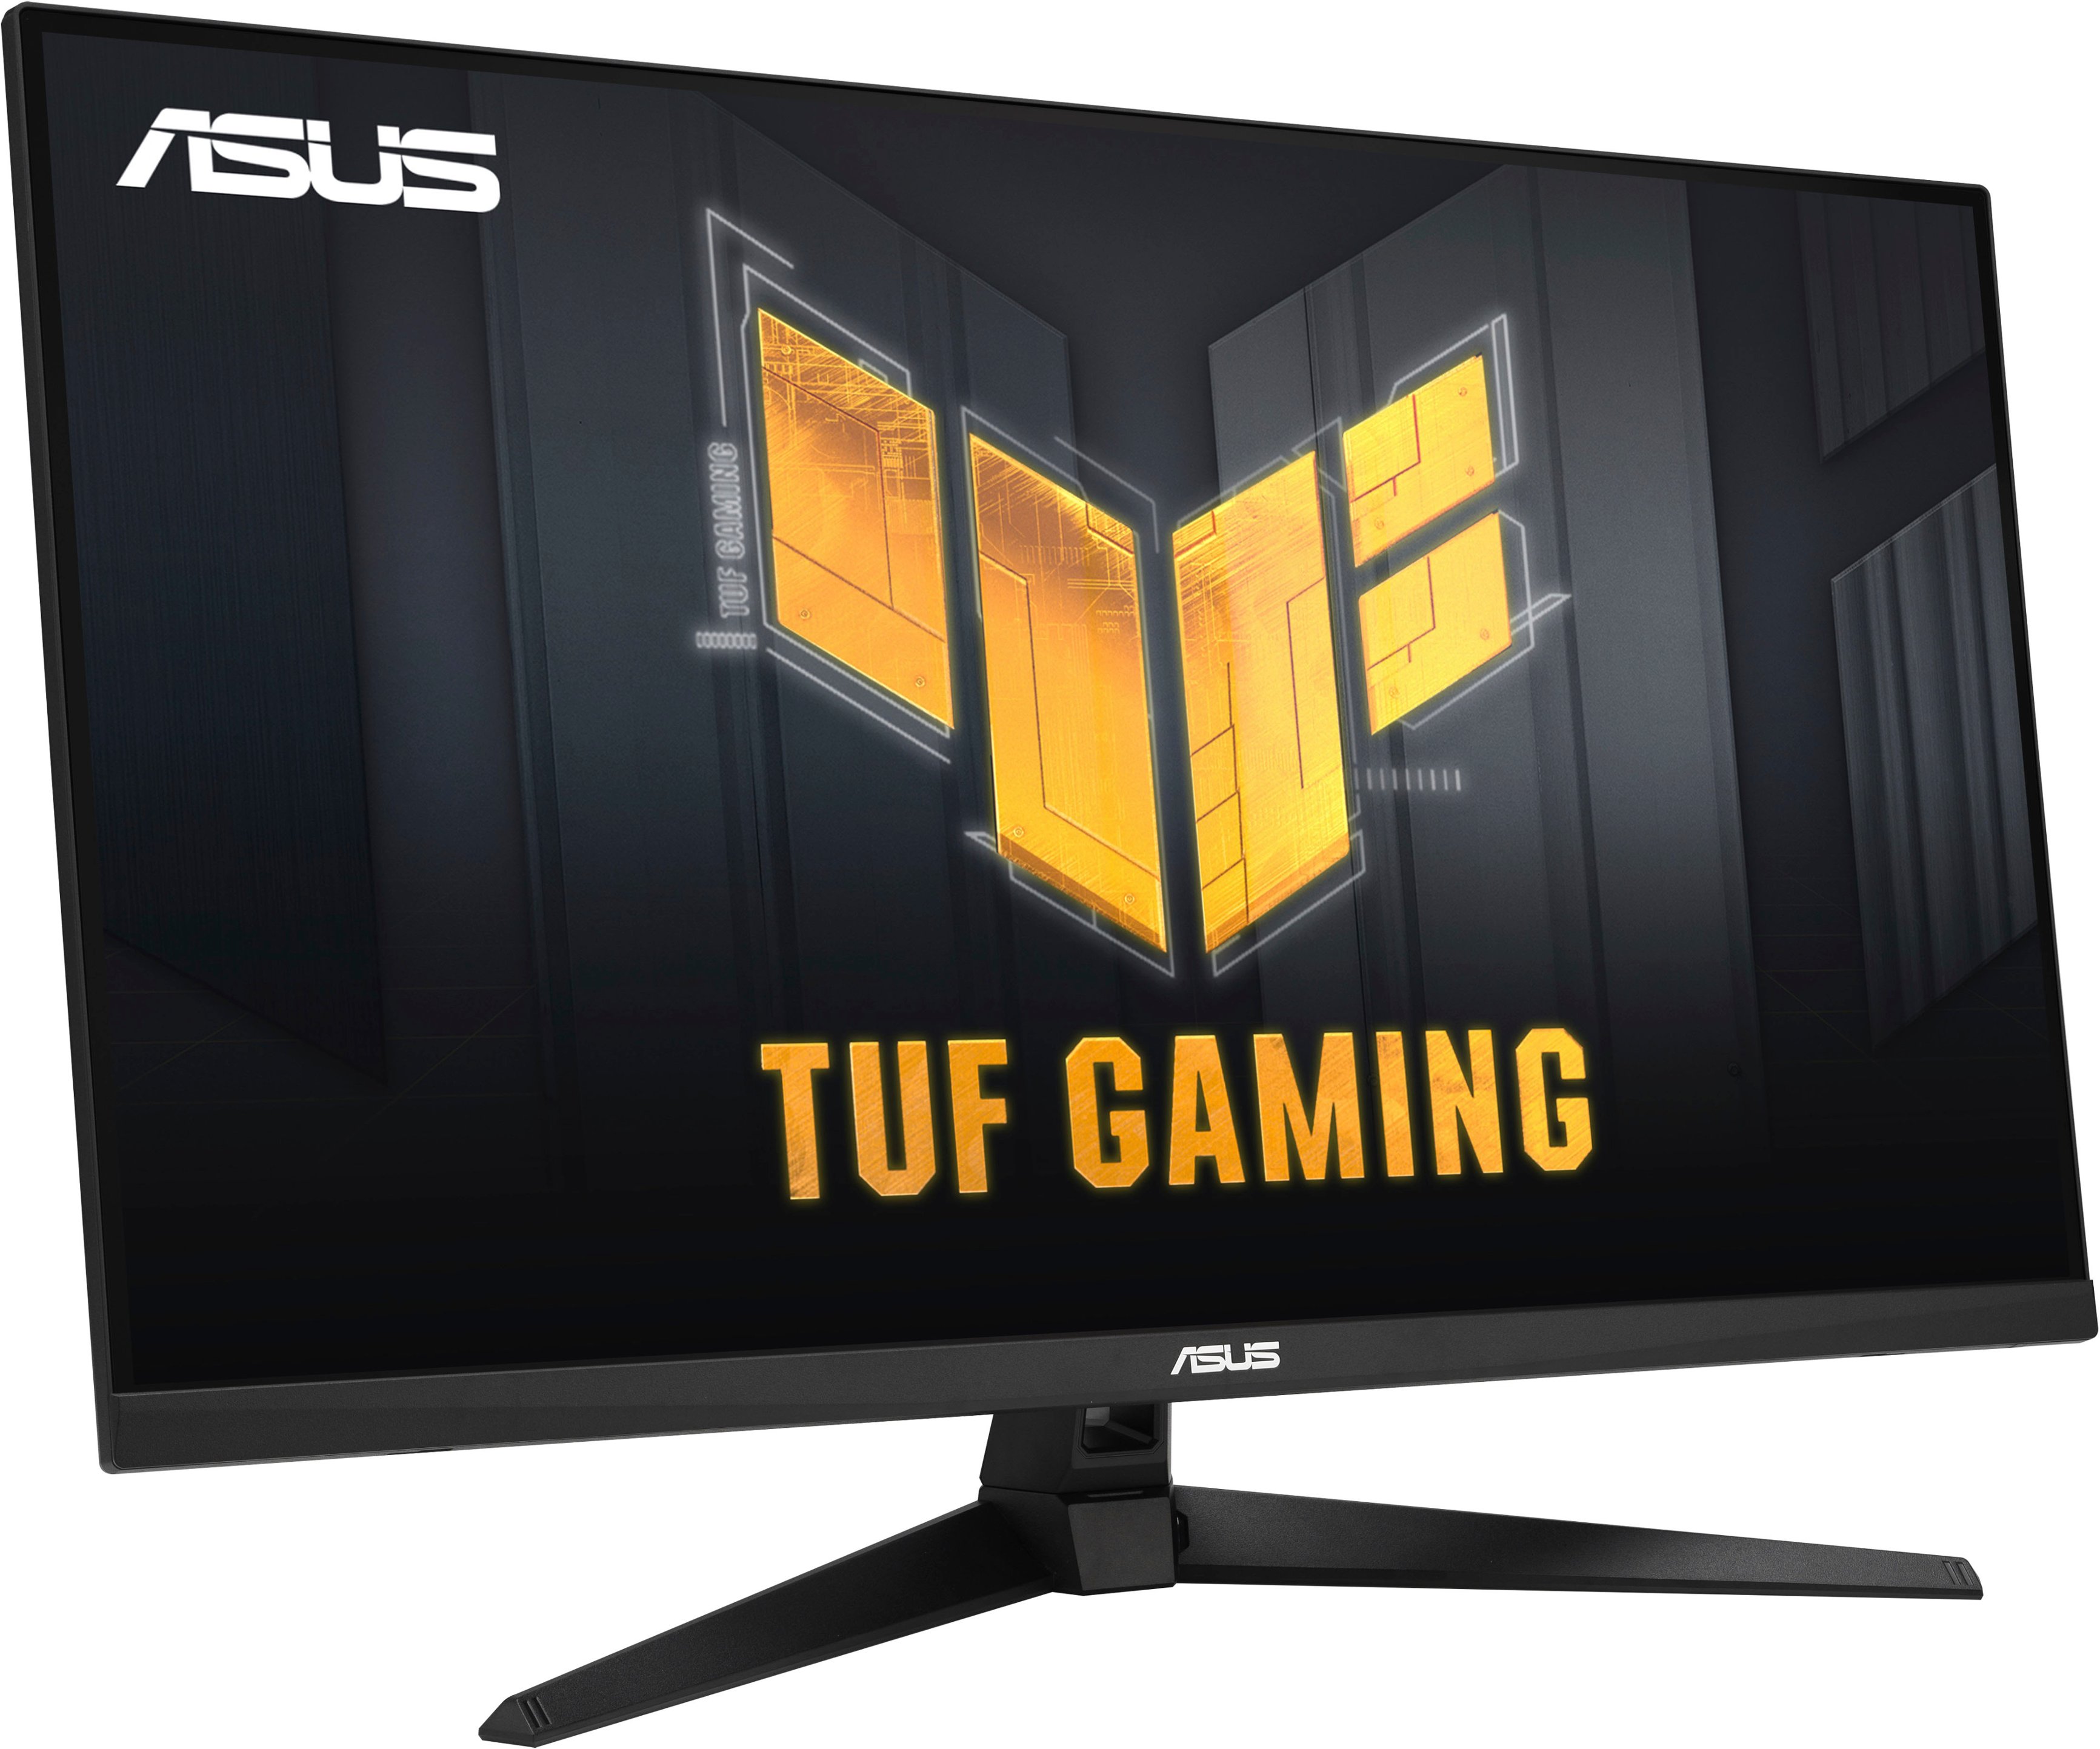 Angle View: ASUS - TUF Gaming 31.5" QHD 170Hz 1ms FreeSync Premium Gaming Monitor with HDR (DisplayPort, HDMI) - Black